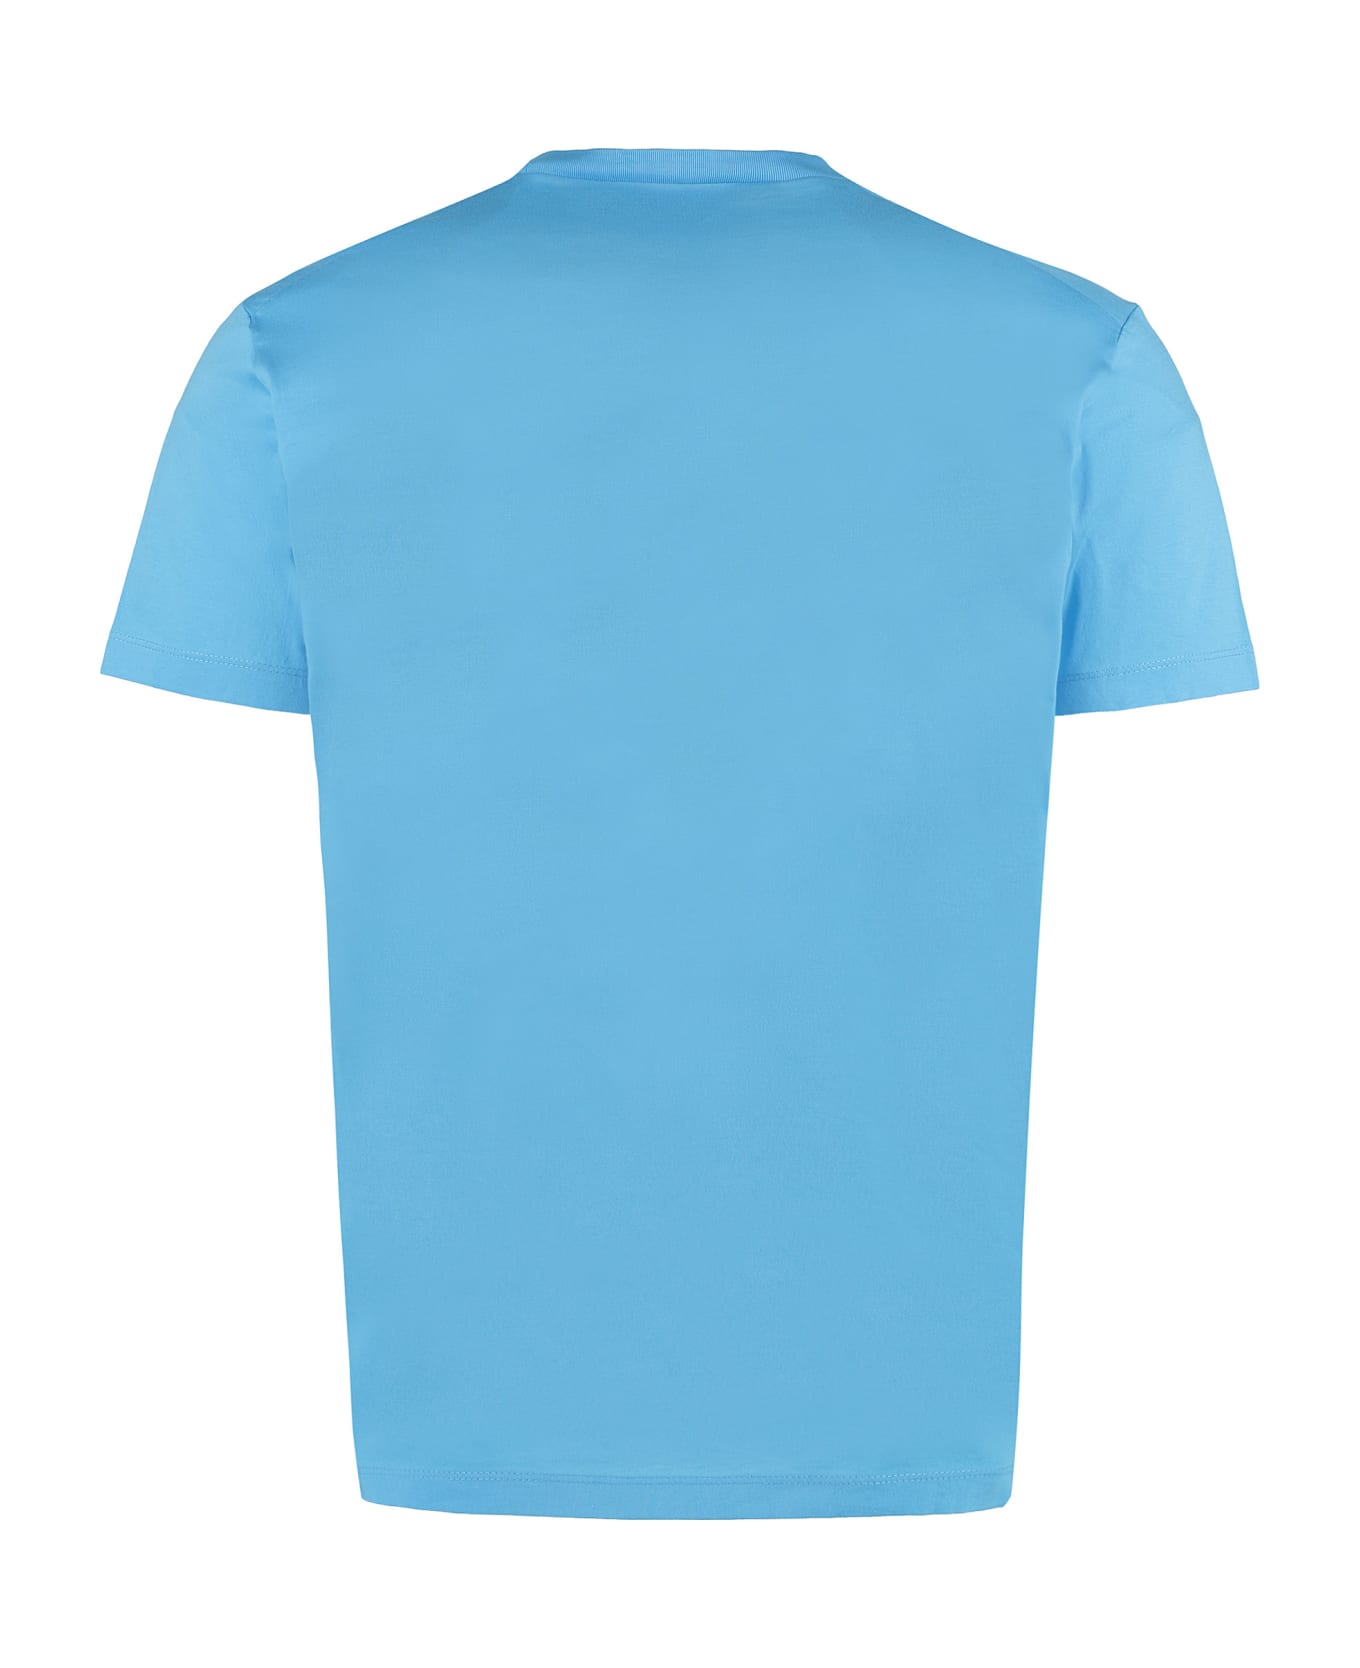 Dsquared2 Logo Cotton T-shirt - Light Blue